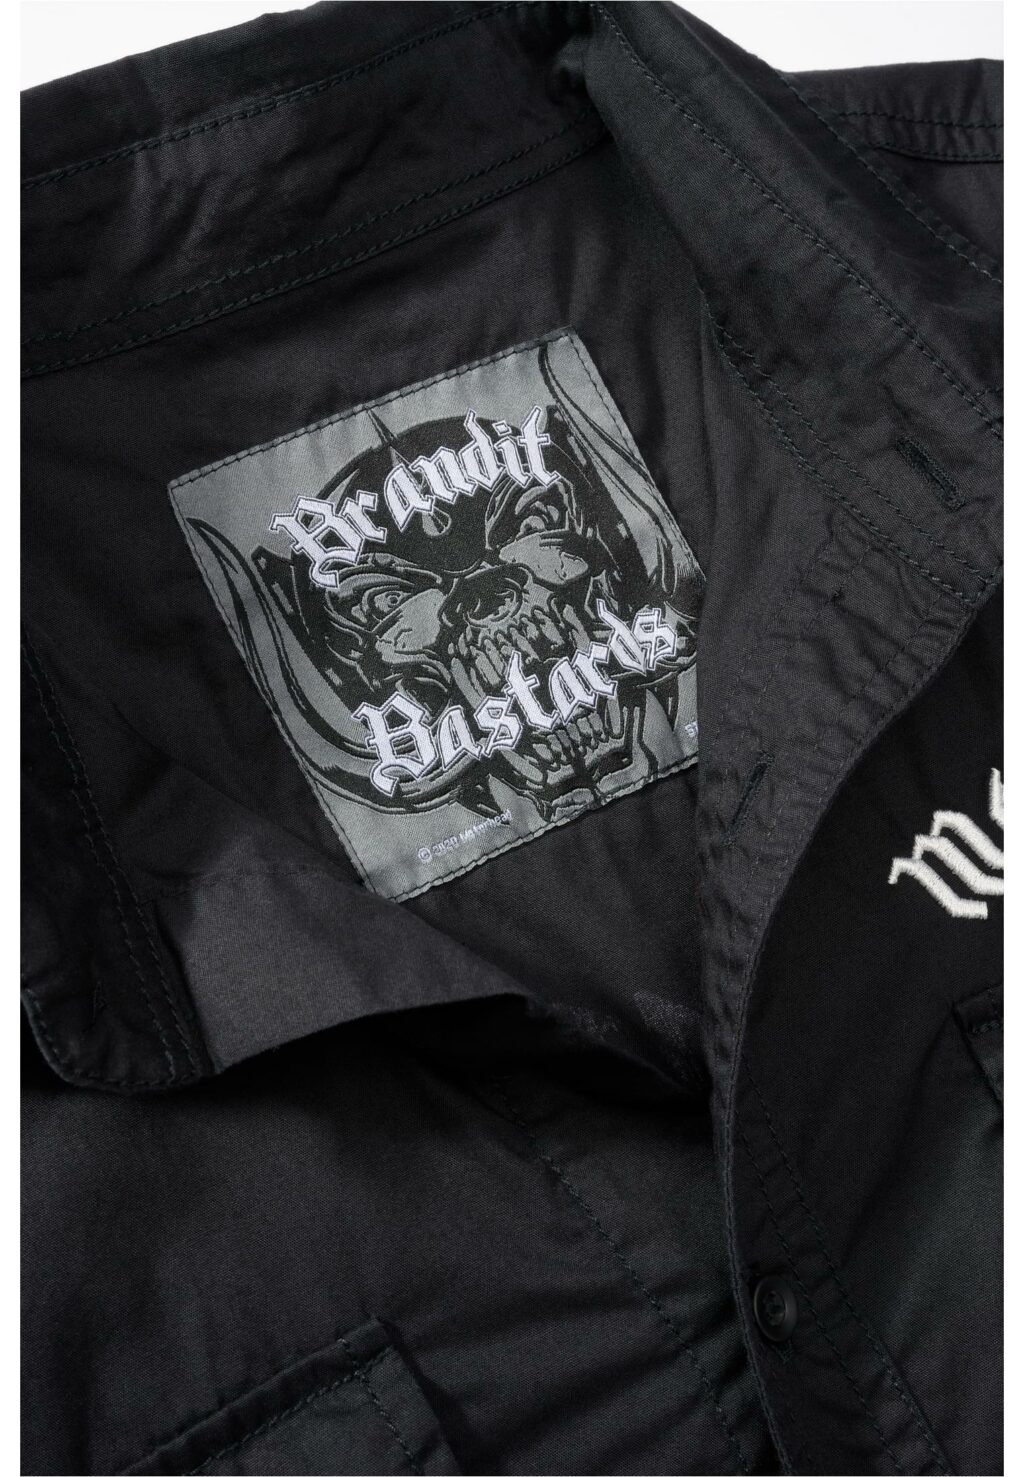 Brandit Motörhead Shirt black BD61011